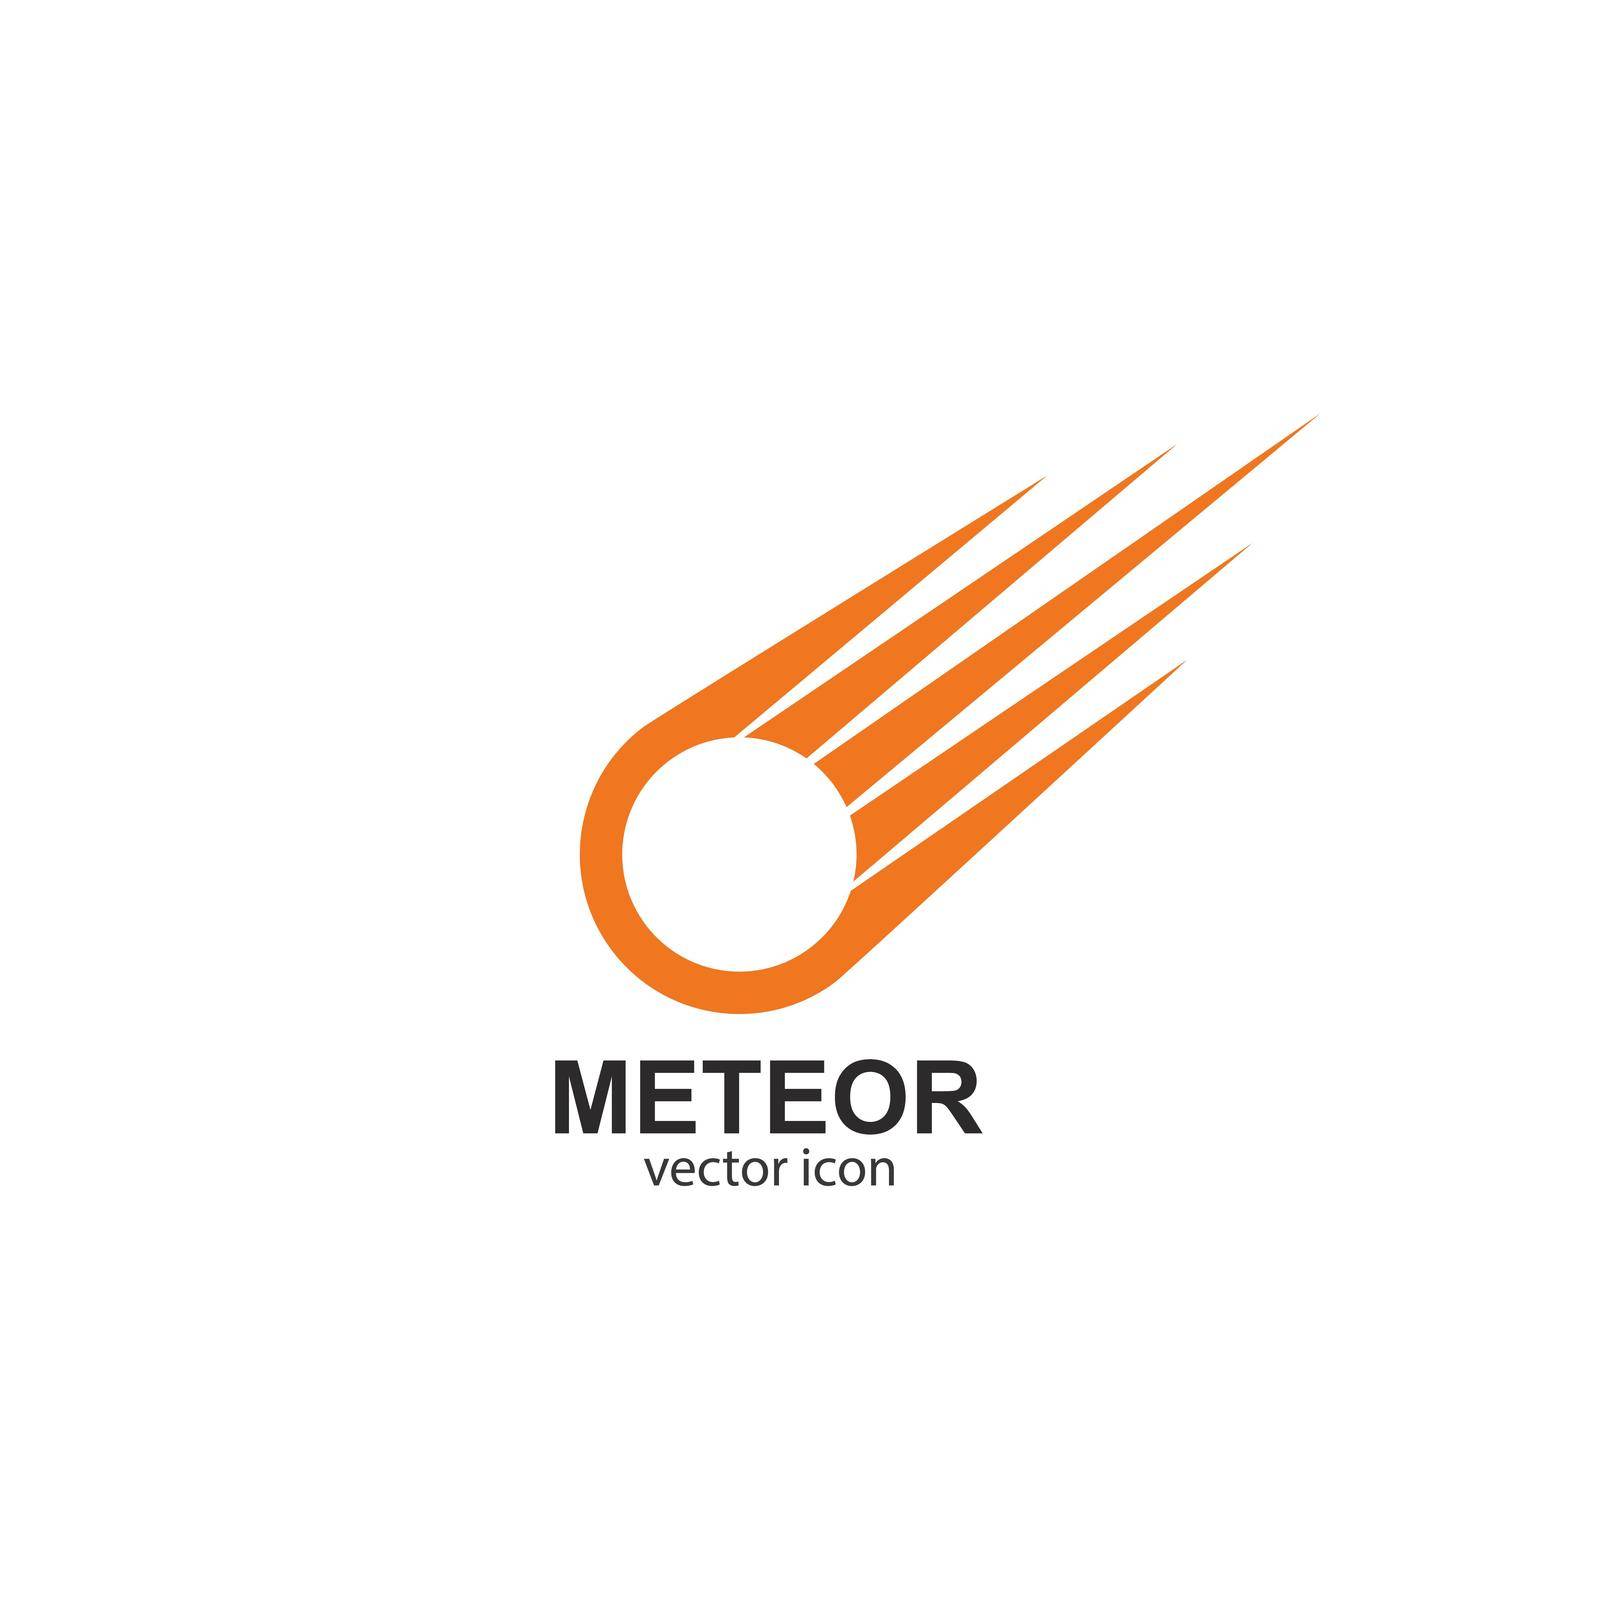 meteor logo vector template by kosasihindra55